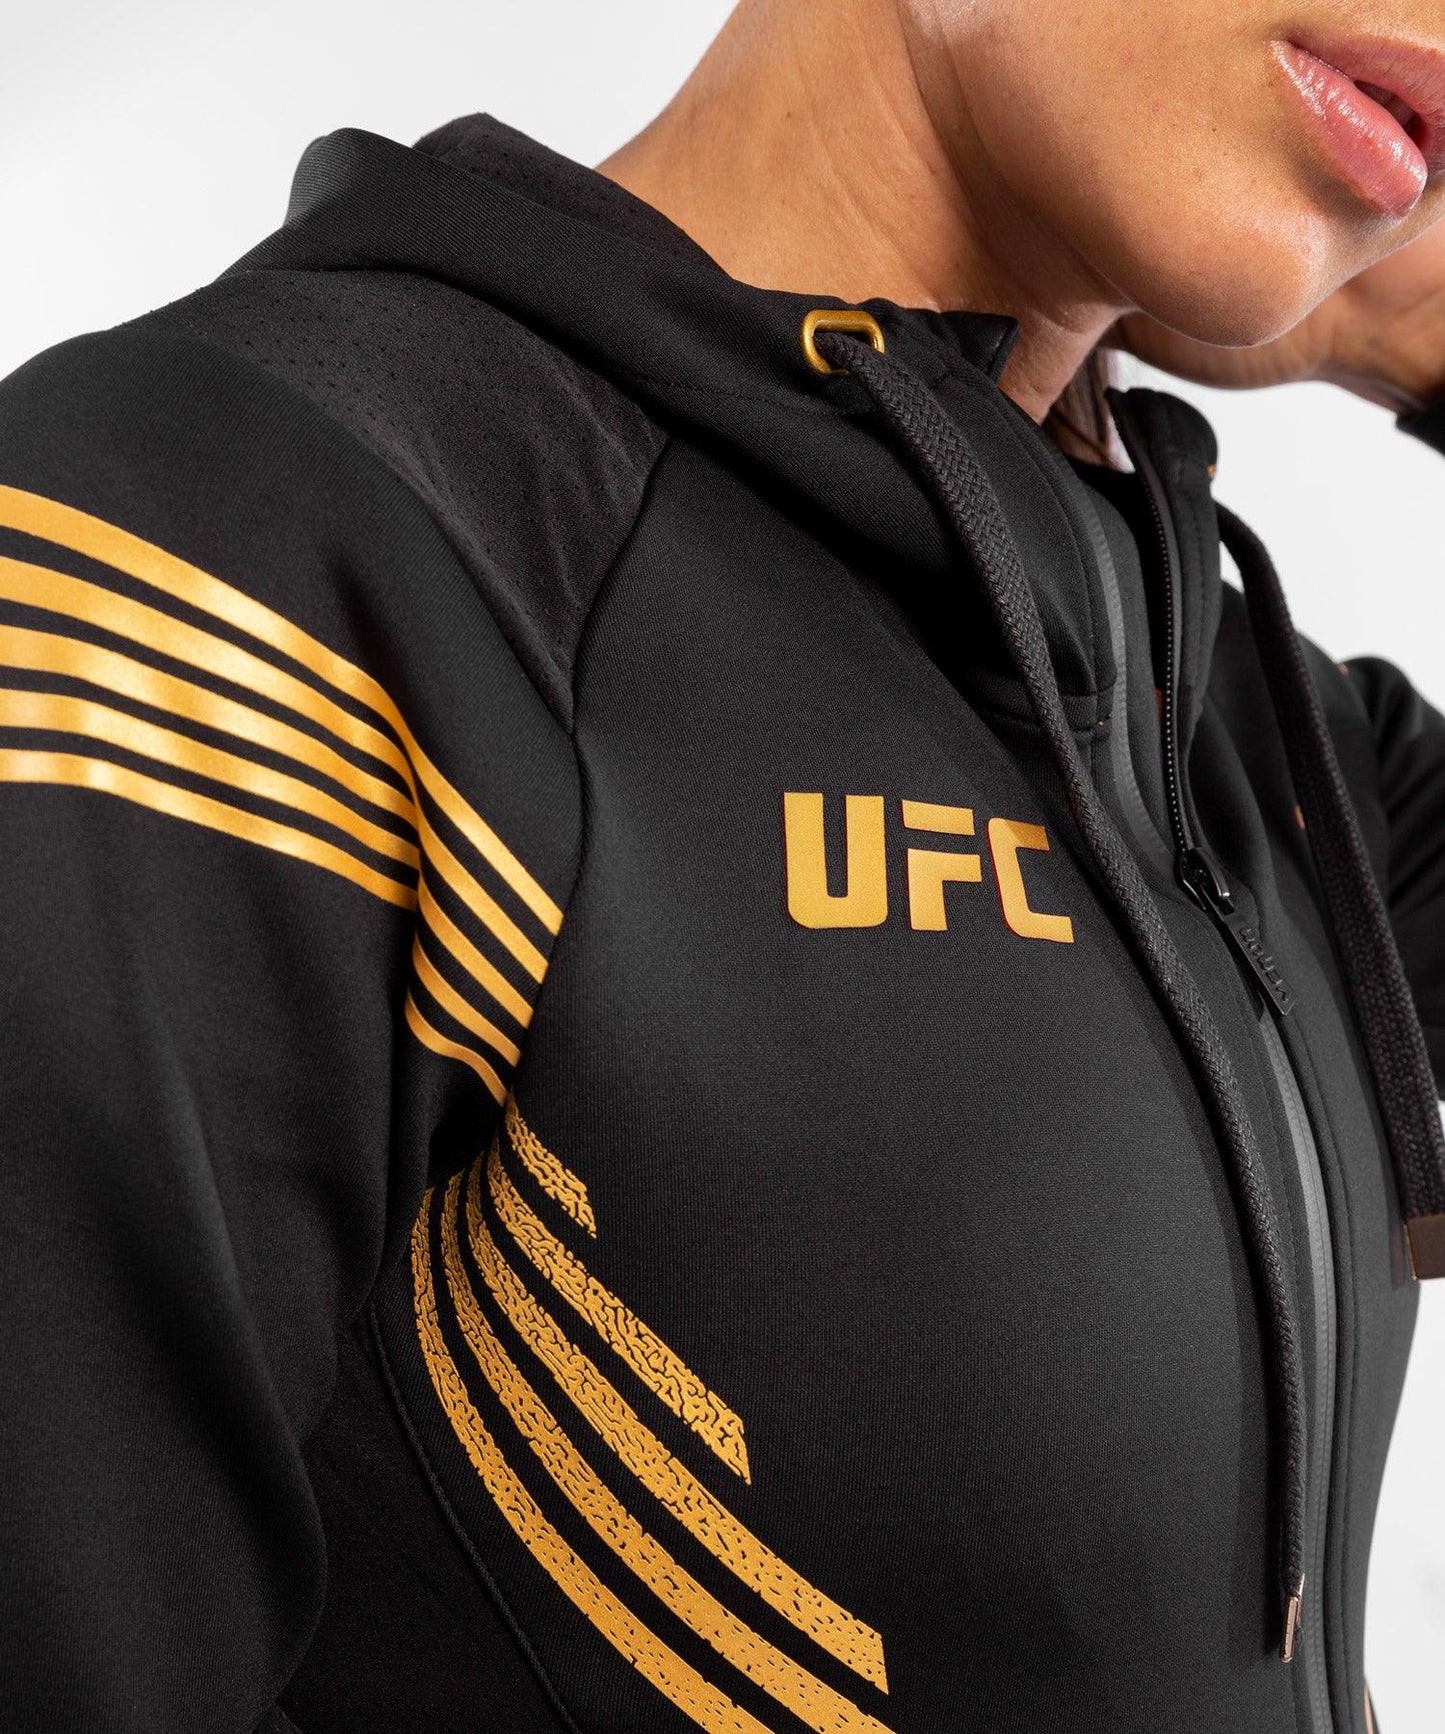 UFC Venum Personalized Authentic Fight Night Women's Walkout Hoodie - Champion